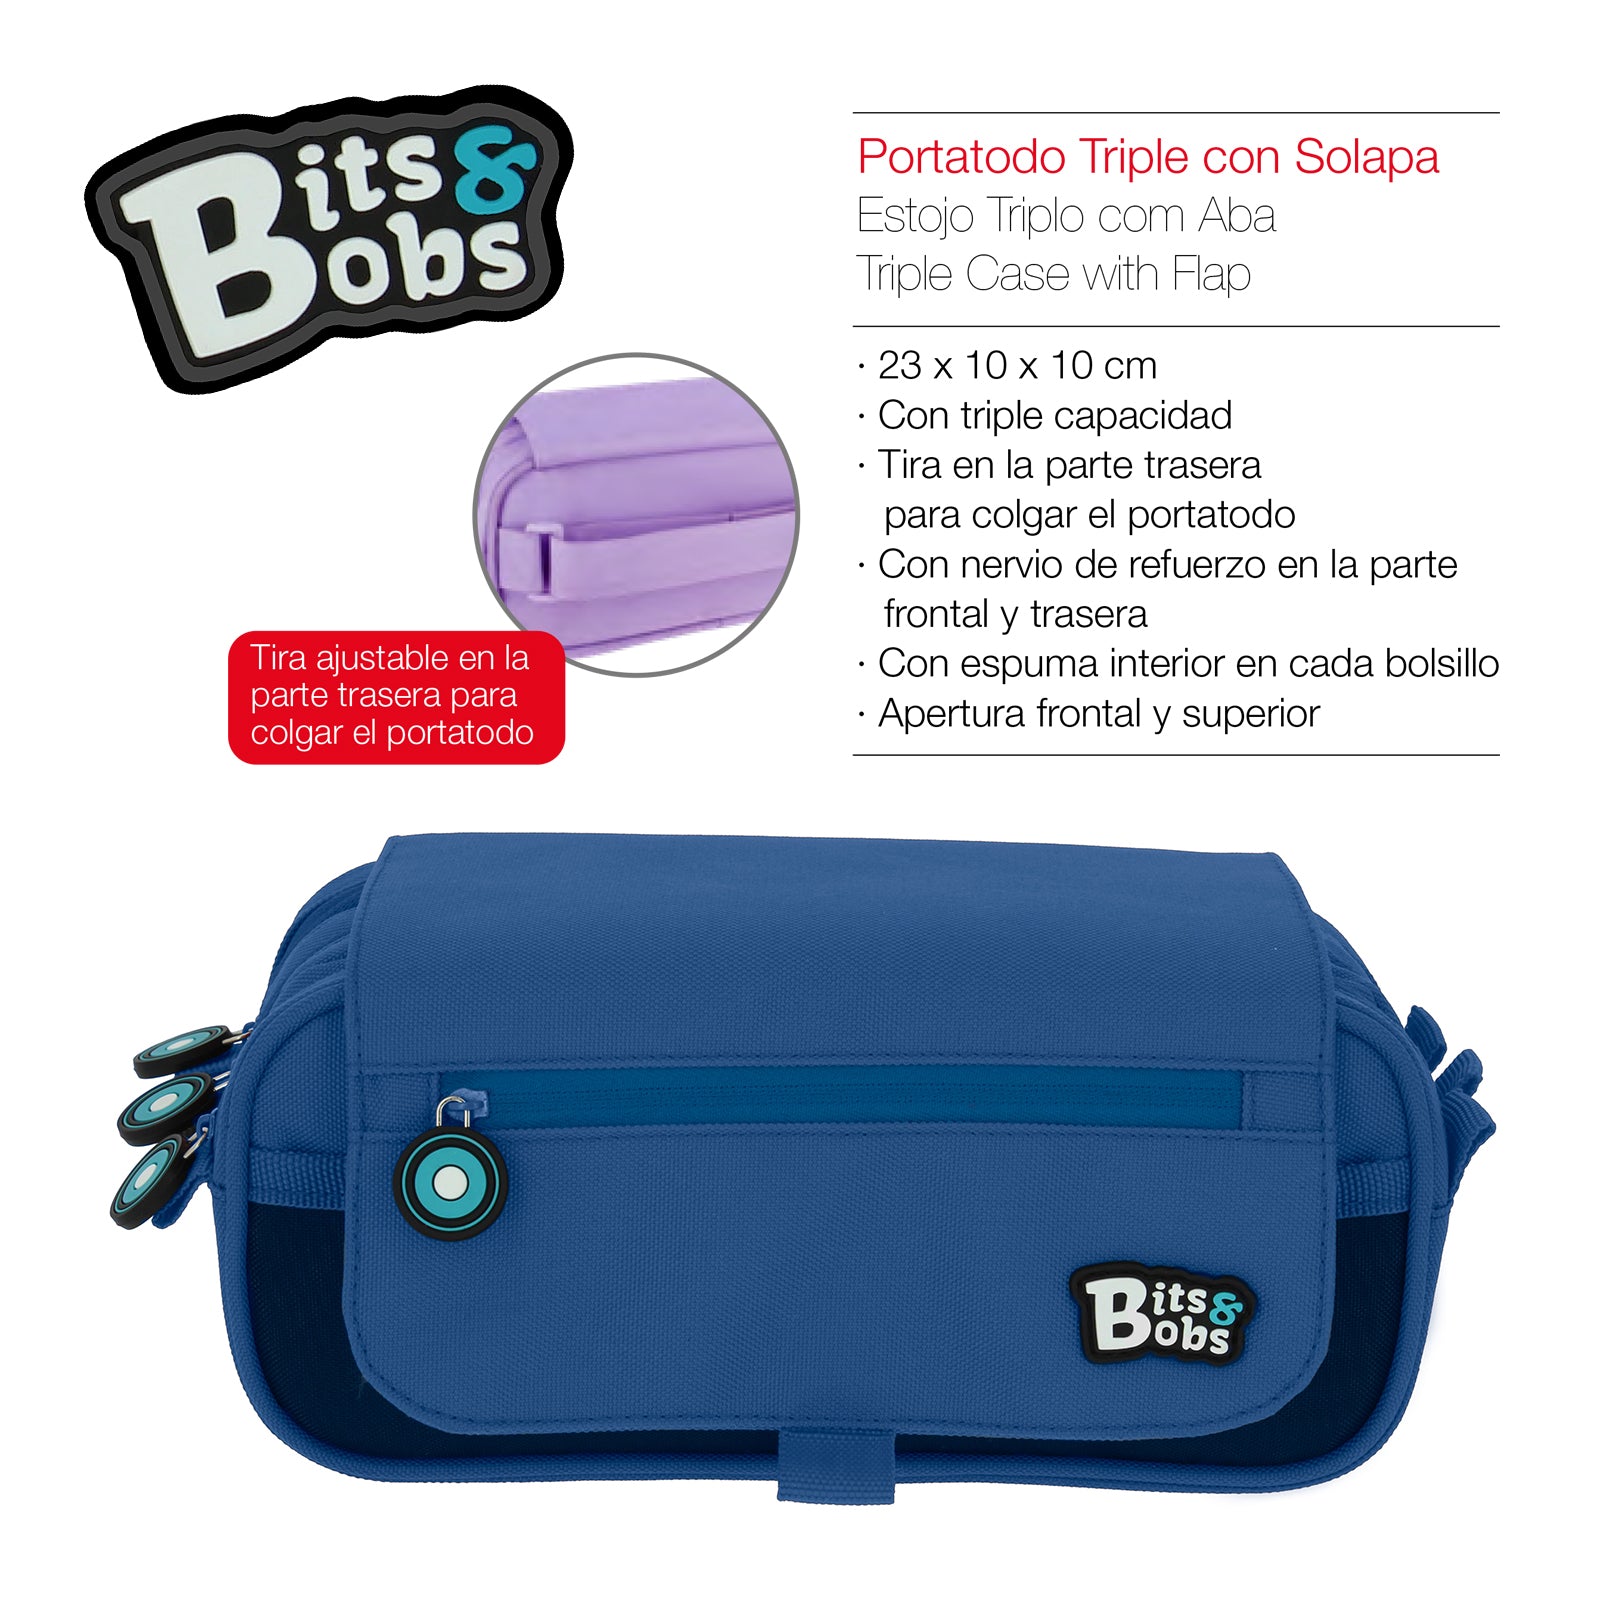 ColePack BitsBobs - Estuche Triple de 3 Cremalleras con Material Escolar Incluido. Azul